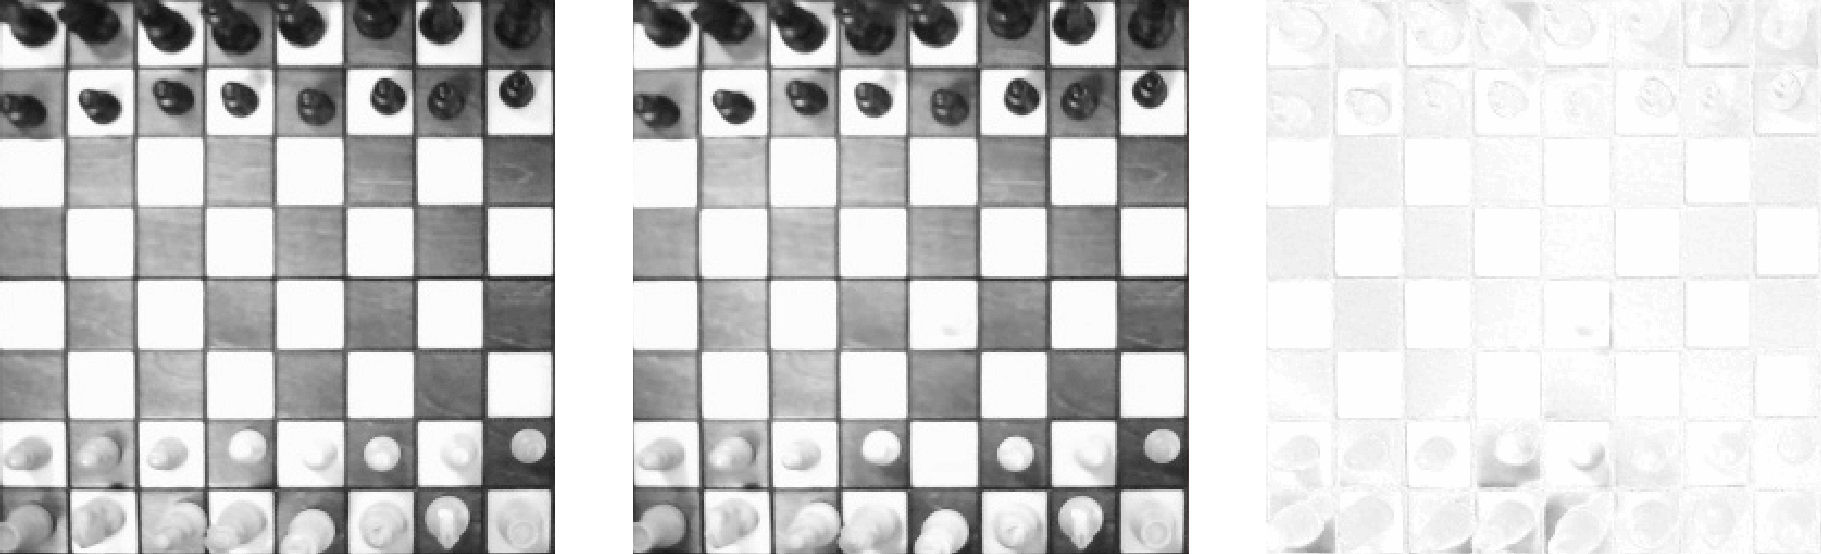 Storyboard showing chess move e2e4